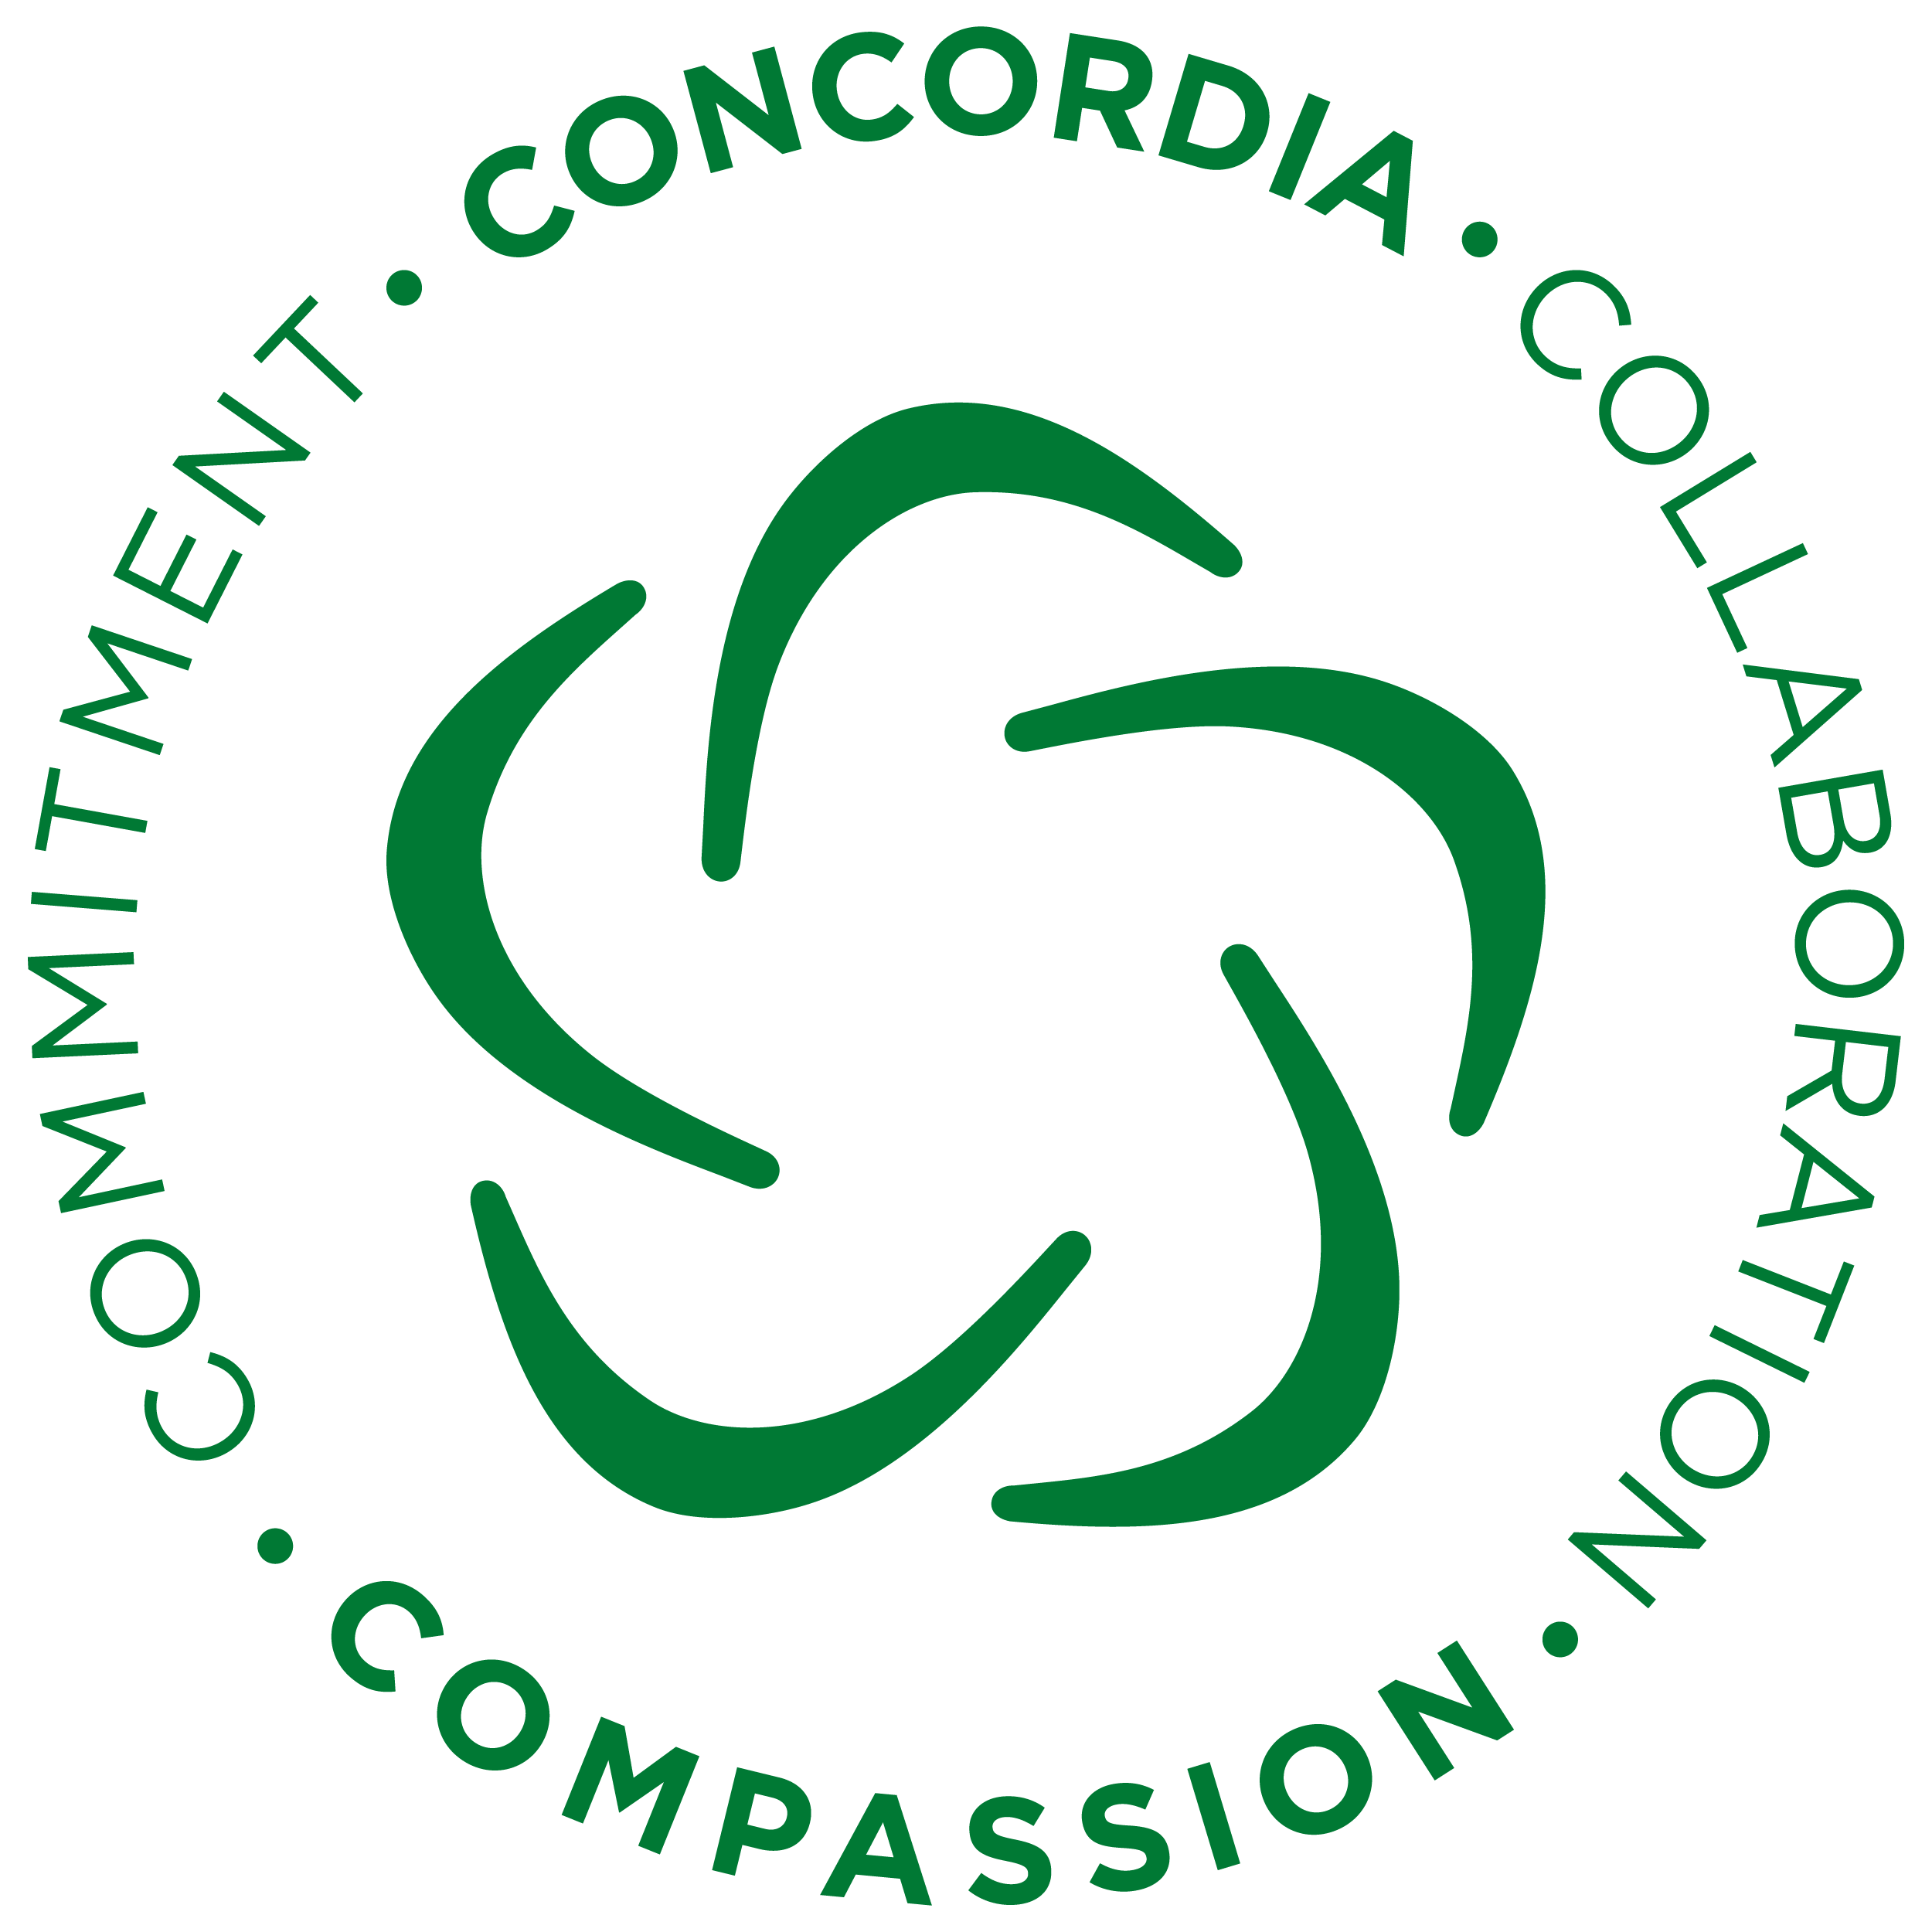 The Concordia Foundation Inc. logo